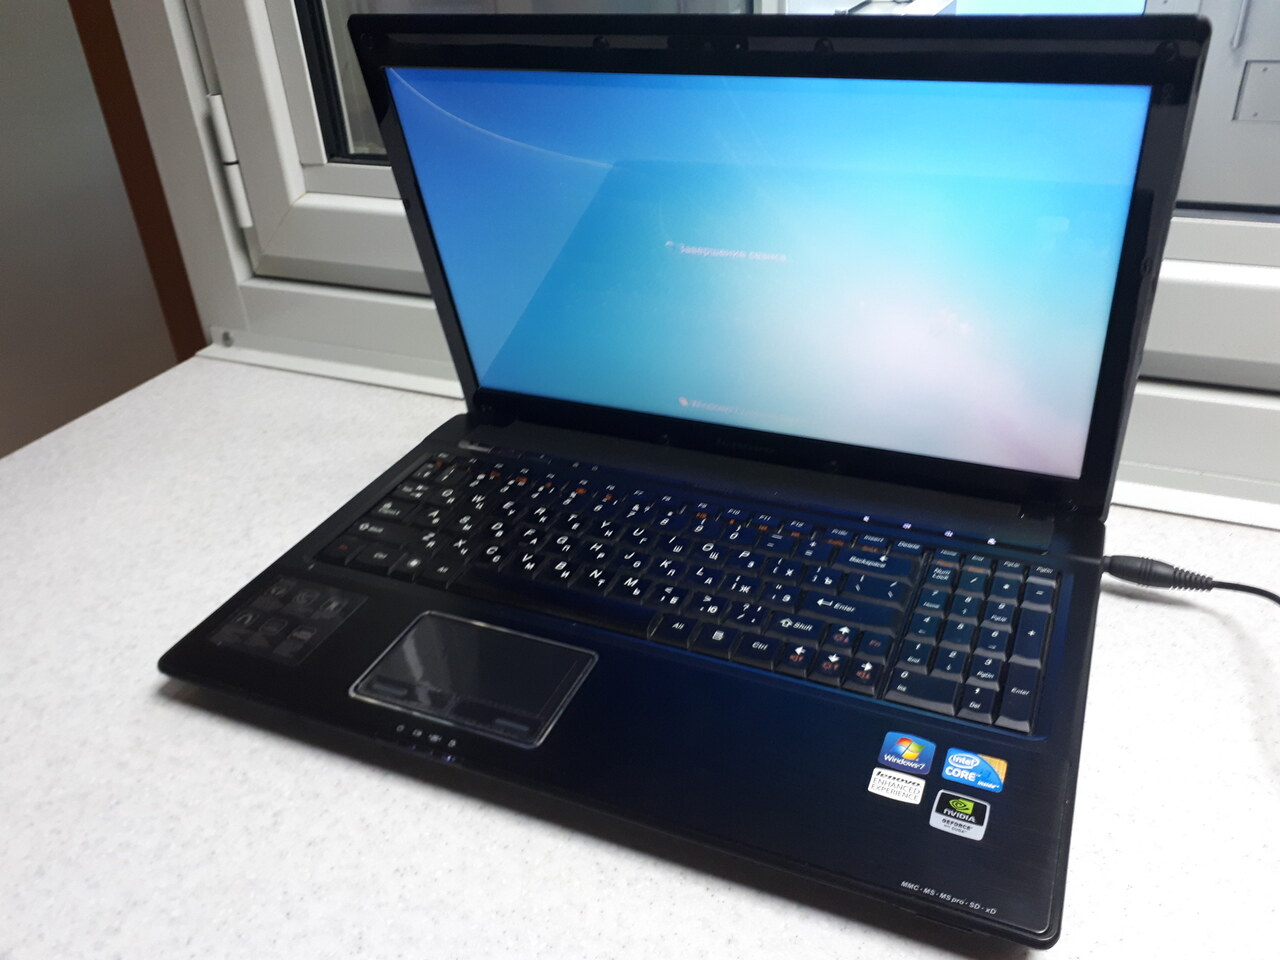 Ноутбук Леново G560 Цена